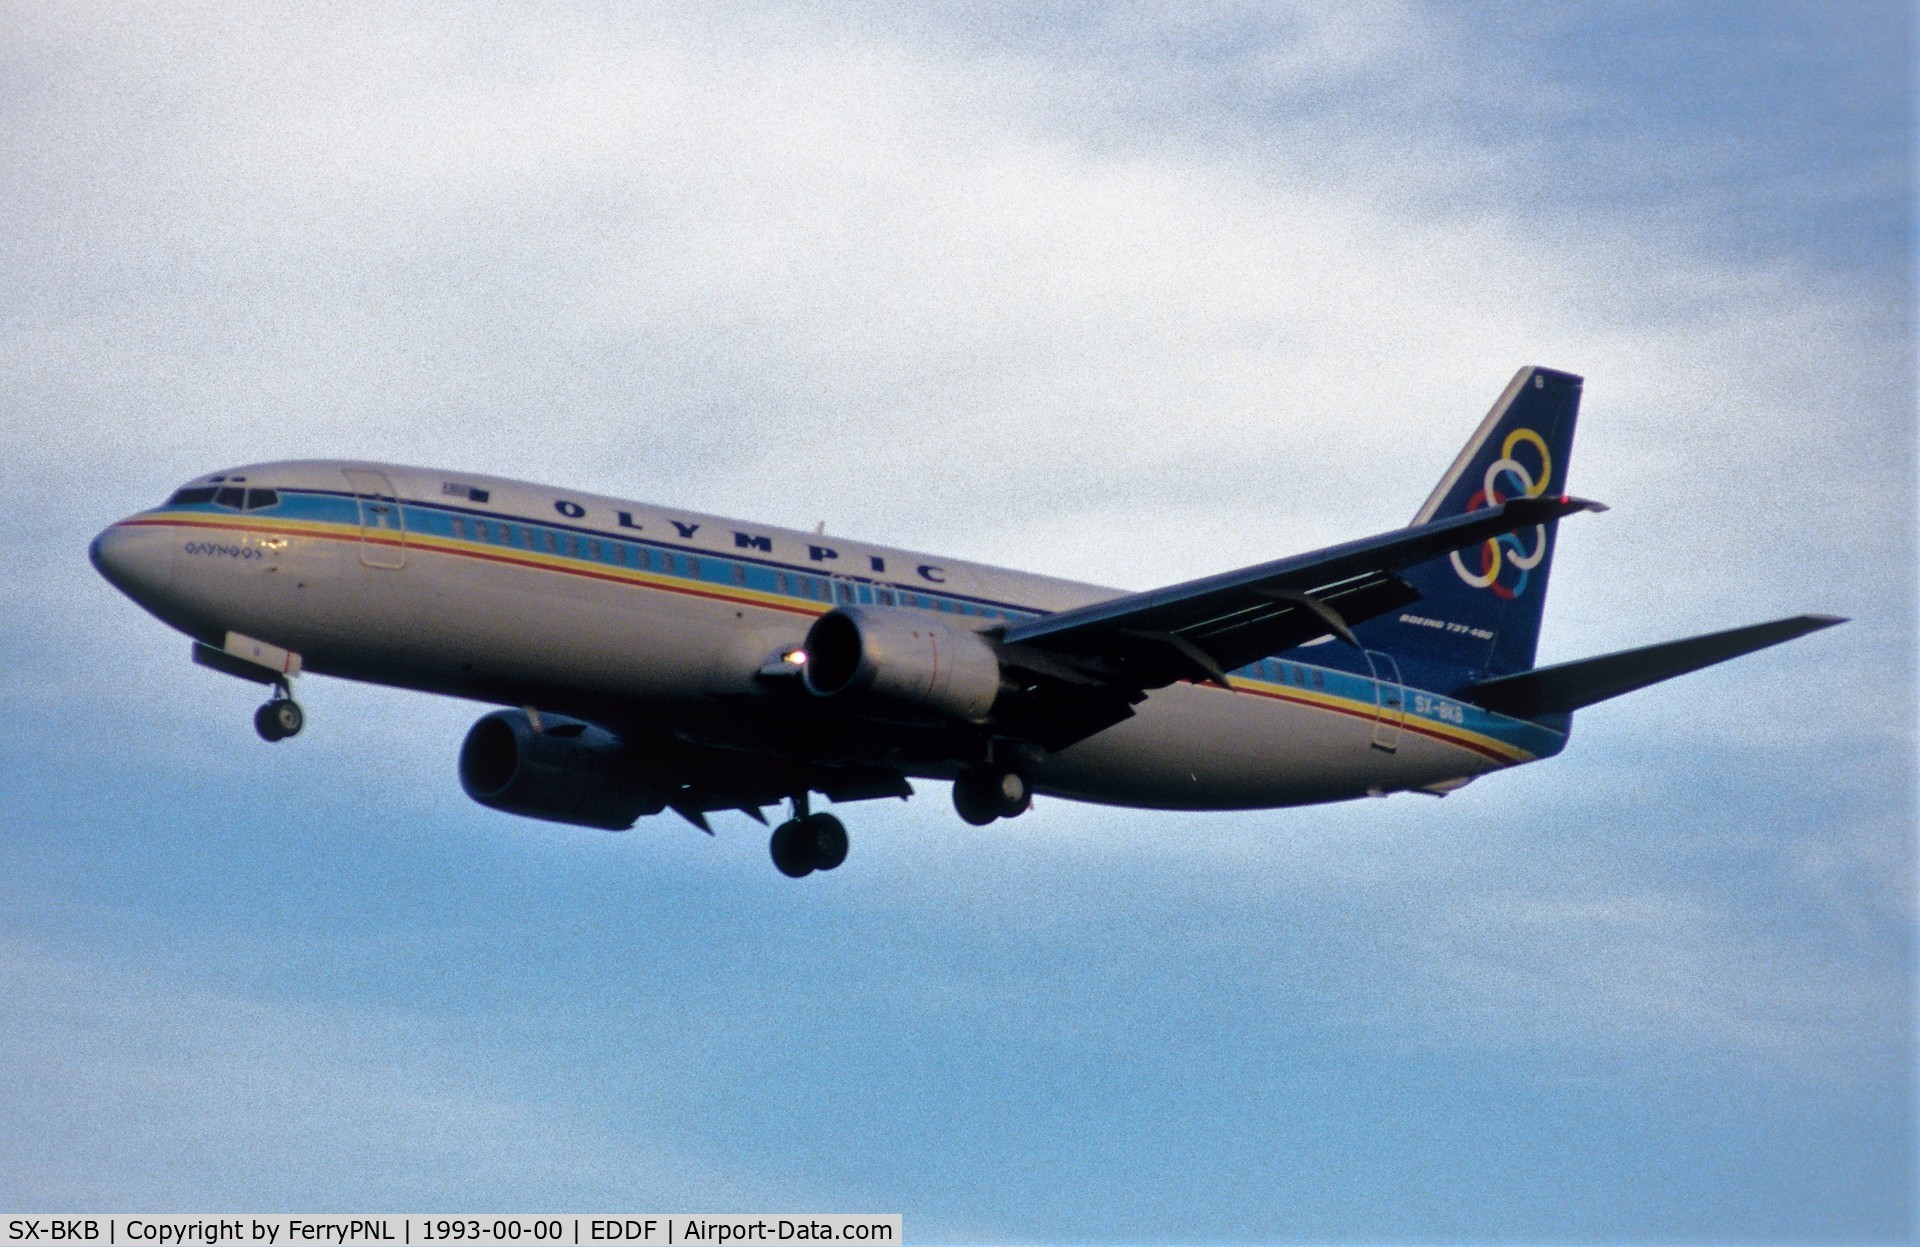 SX-BKB, 1991 Boeing 737-484 C/N 25314/2124, Arrival of Olympic B734